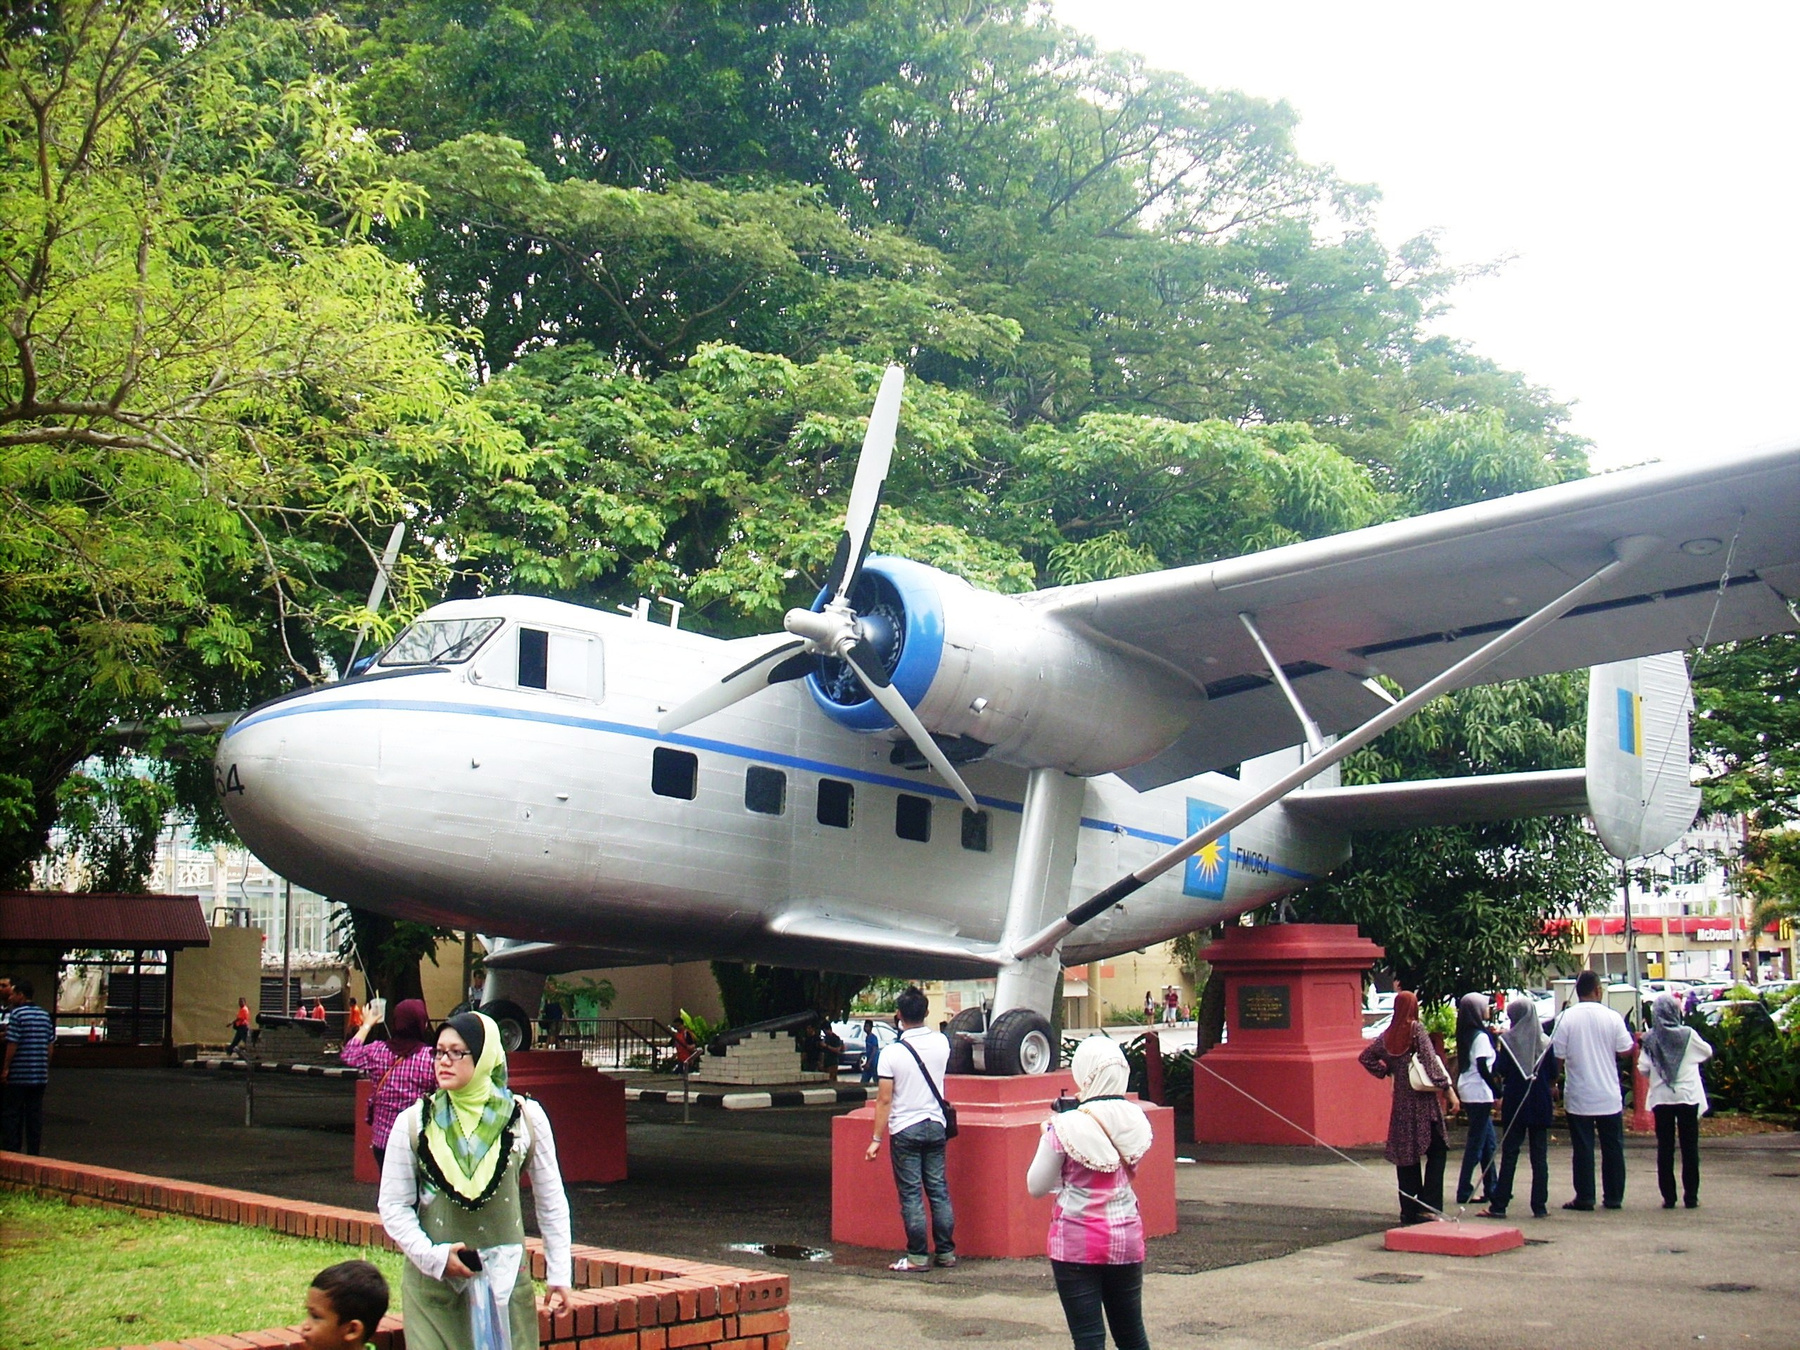 Scotish Aviation "Twin Pioneer" Самолет техно